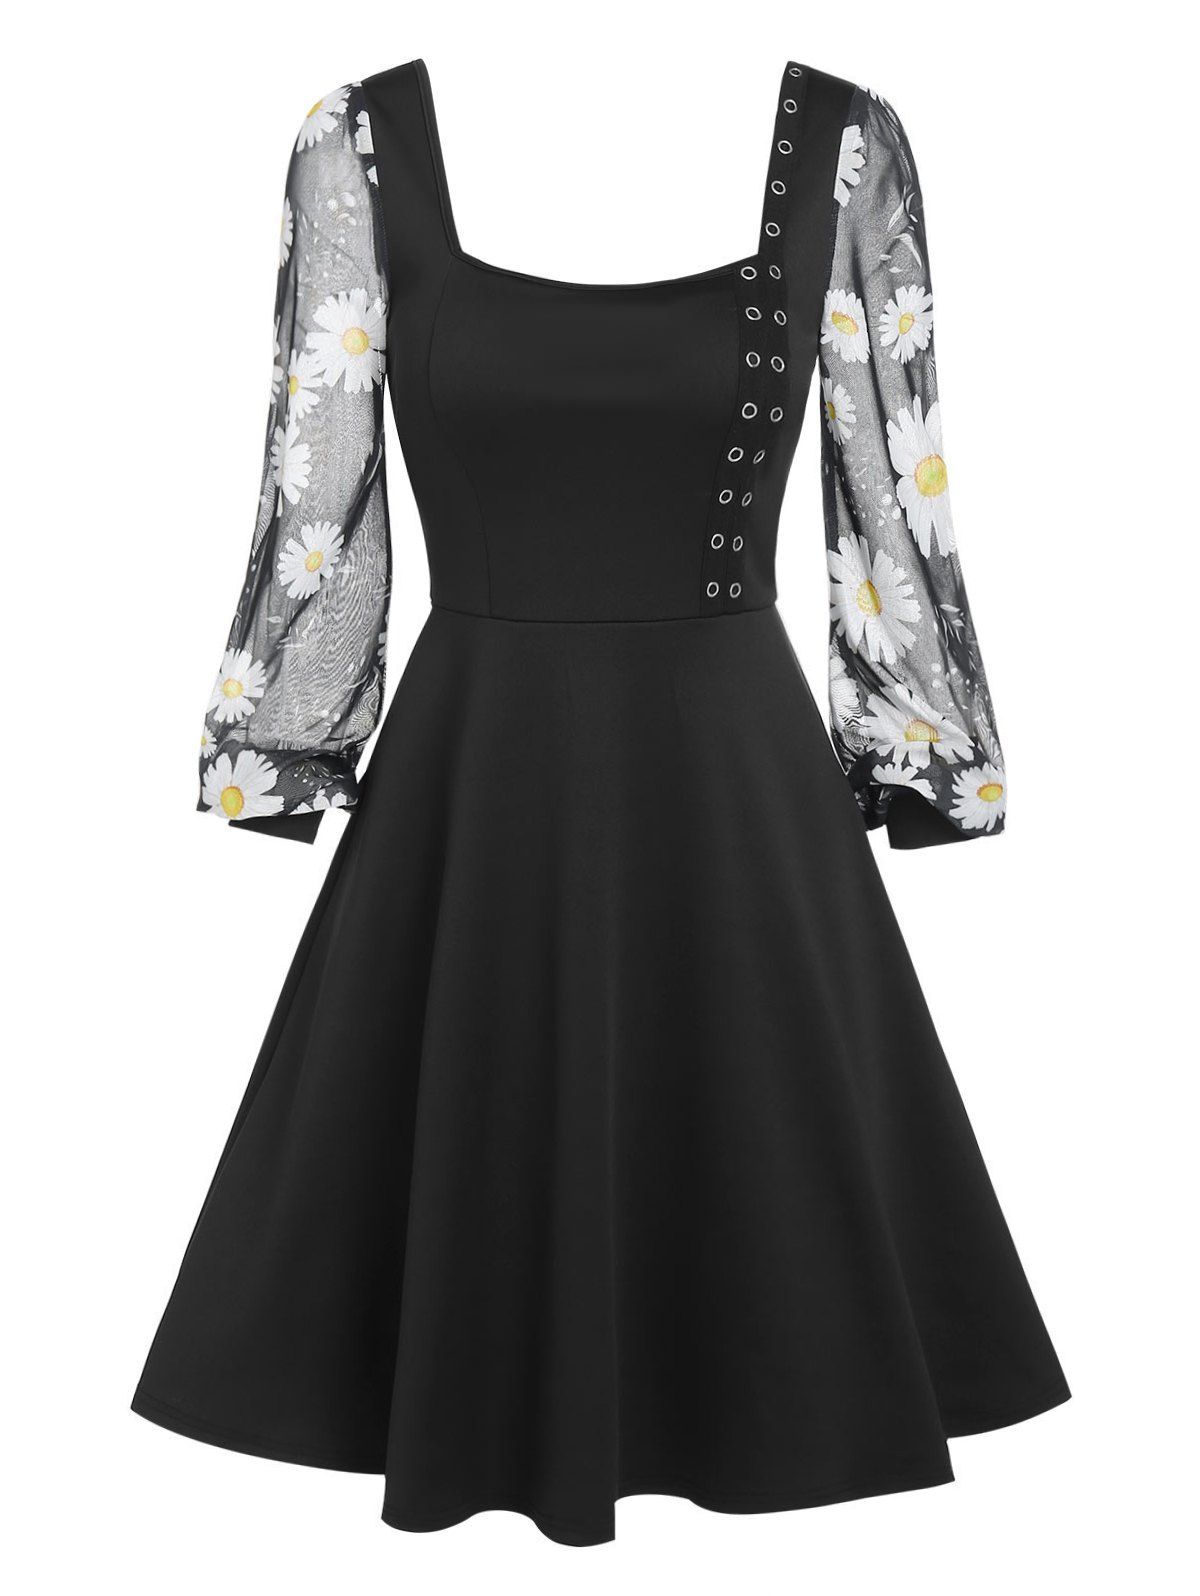 Daisy Print Mesh Lantern Sleeve Flare Dress - BLACK XXXL